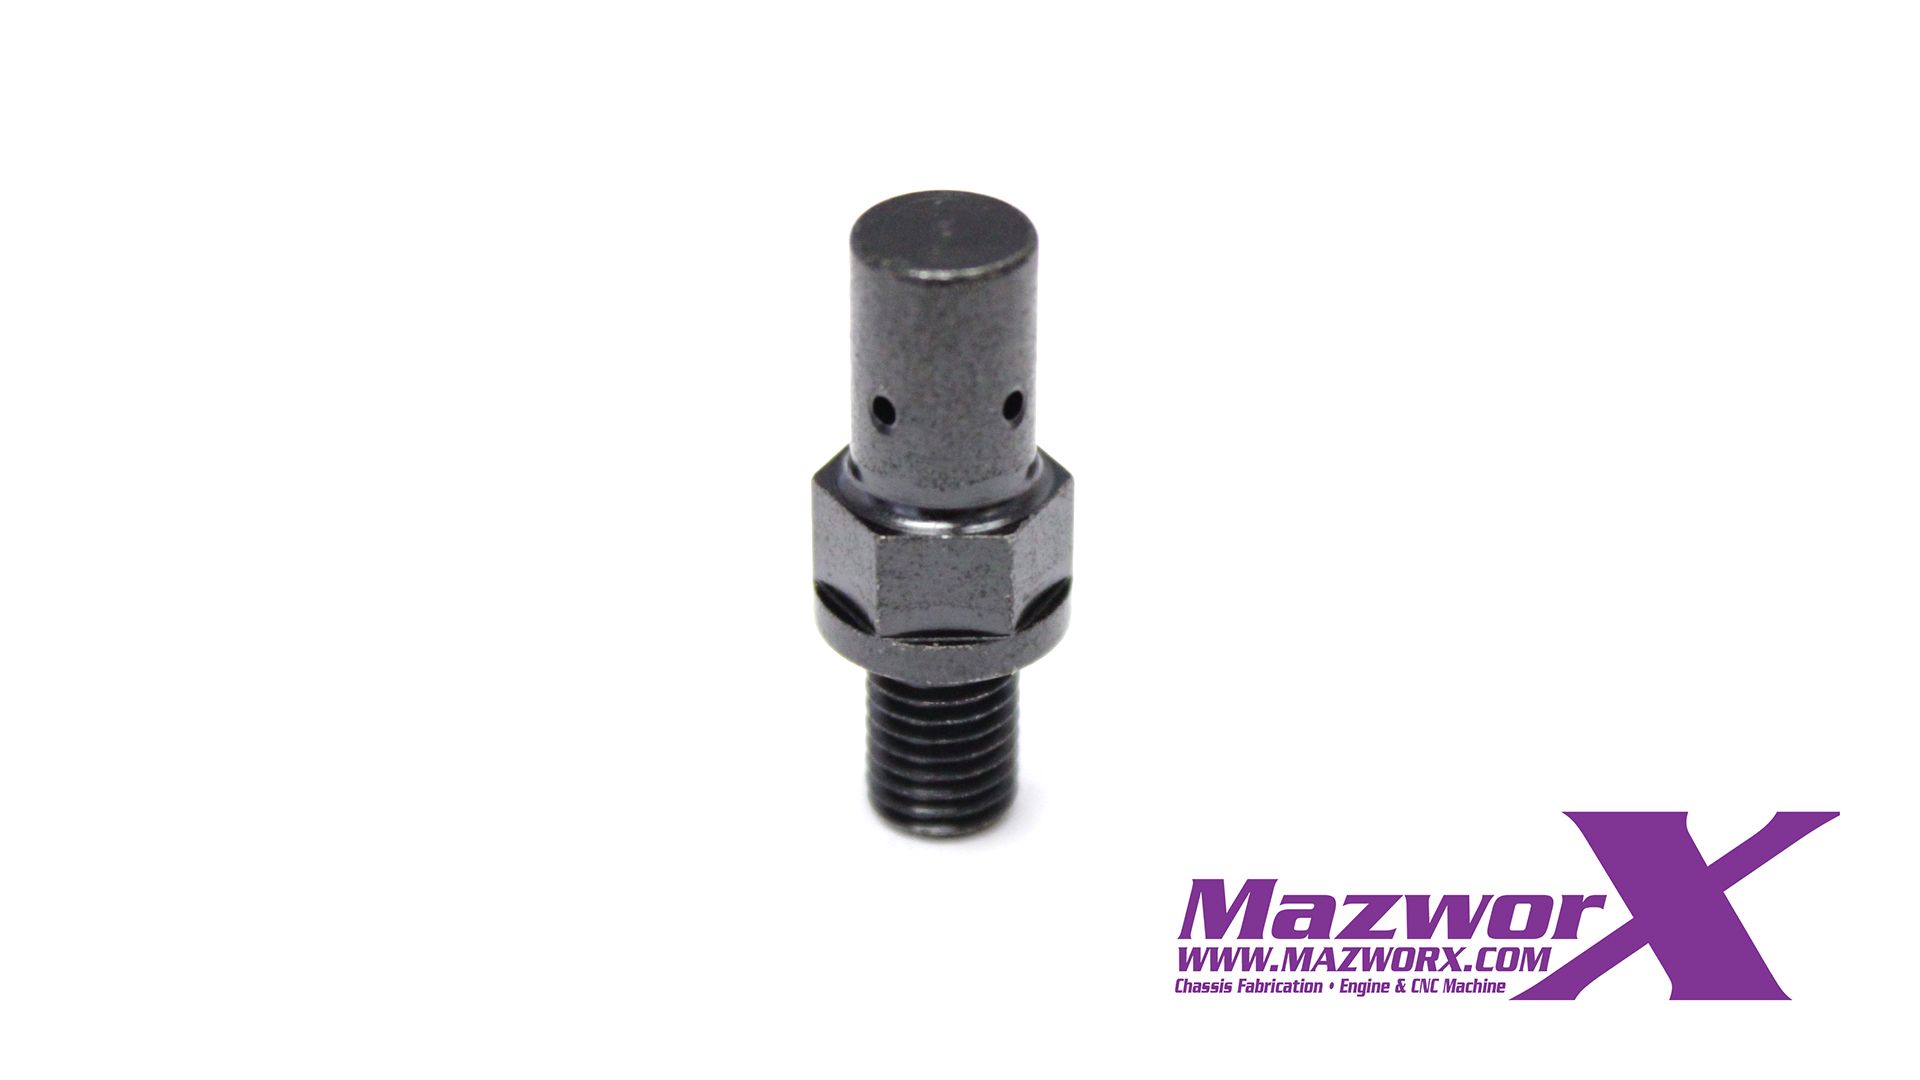 Mazworx Timing Chain Oil Squirter - Nissan SR20